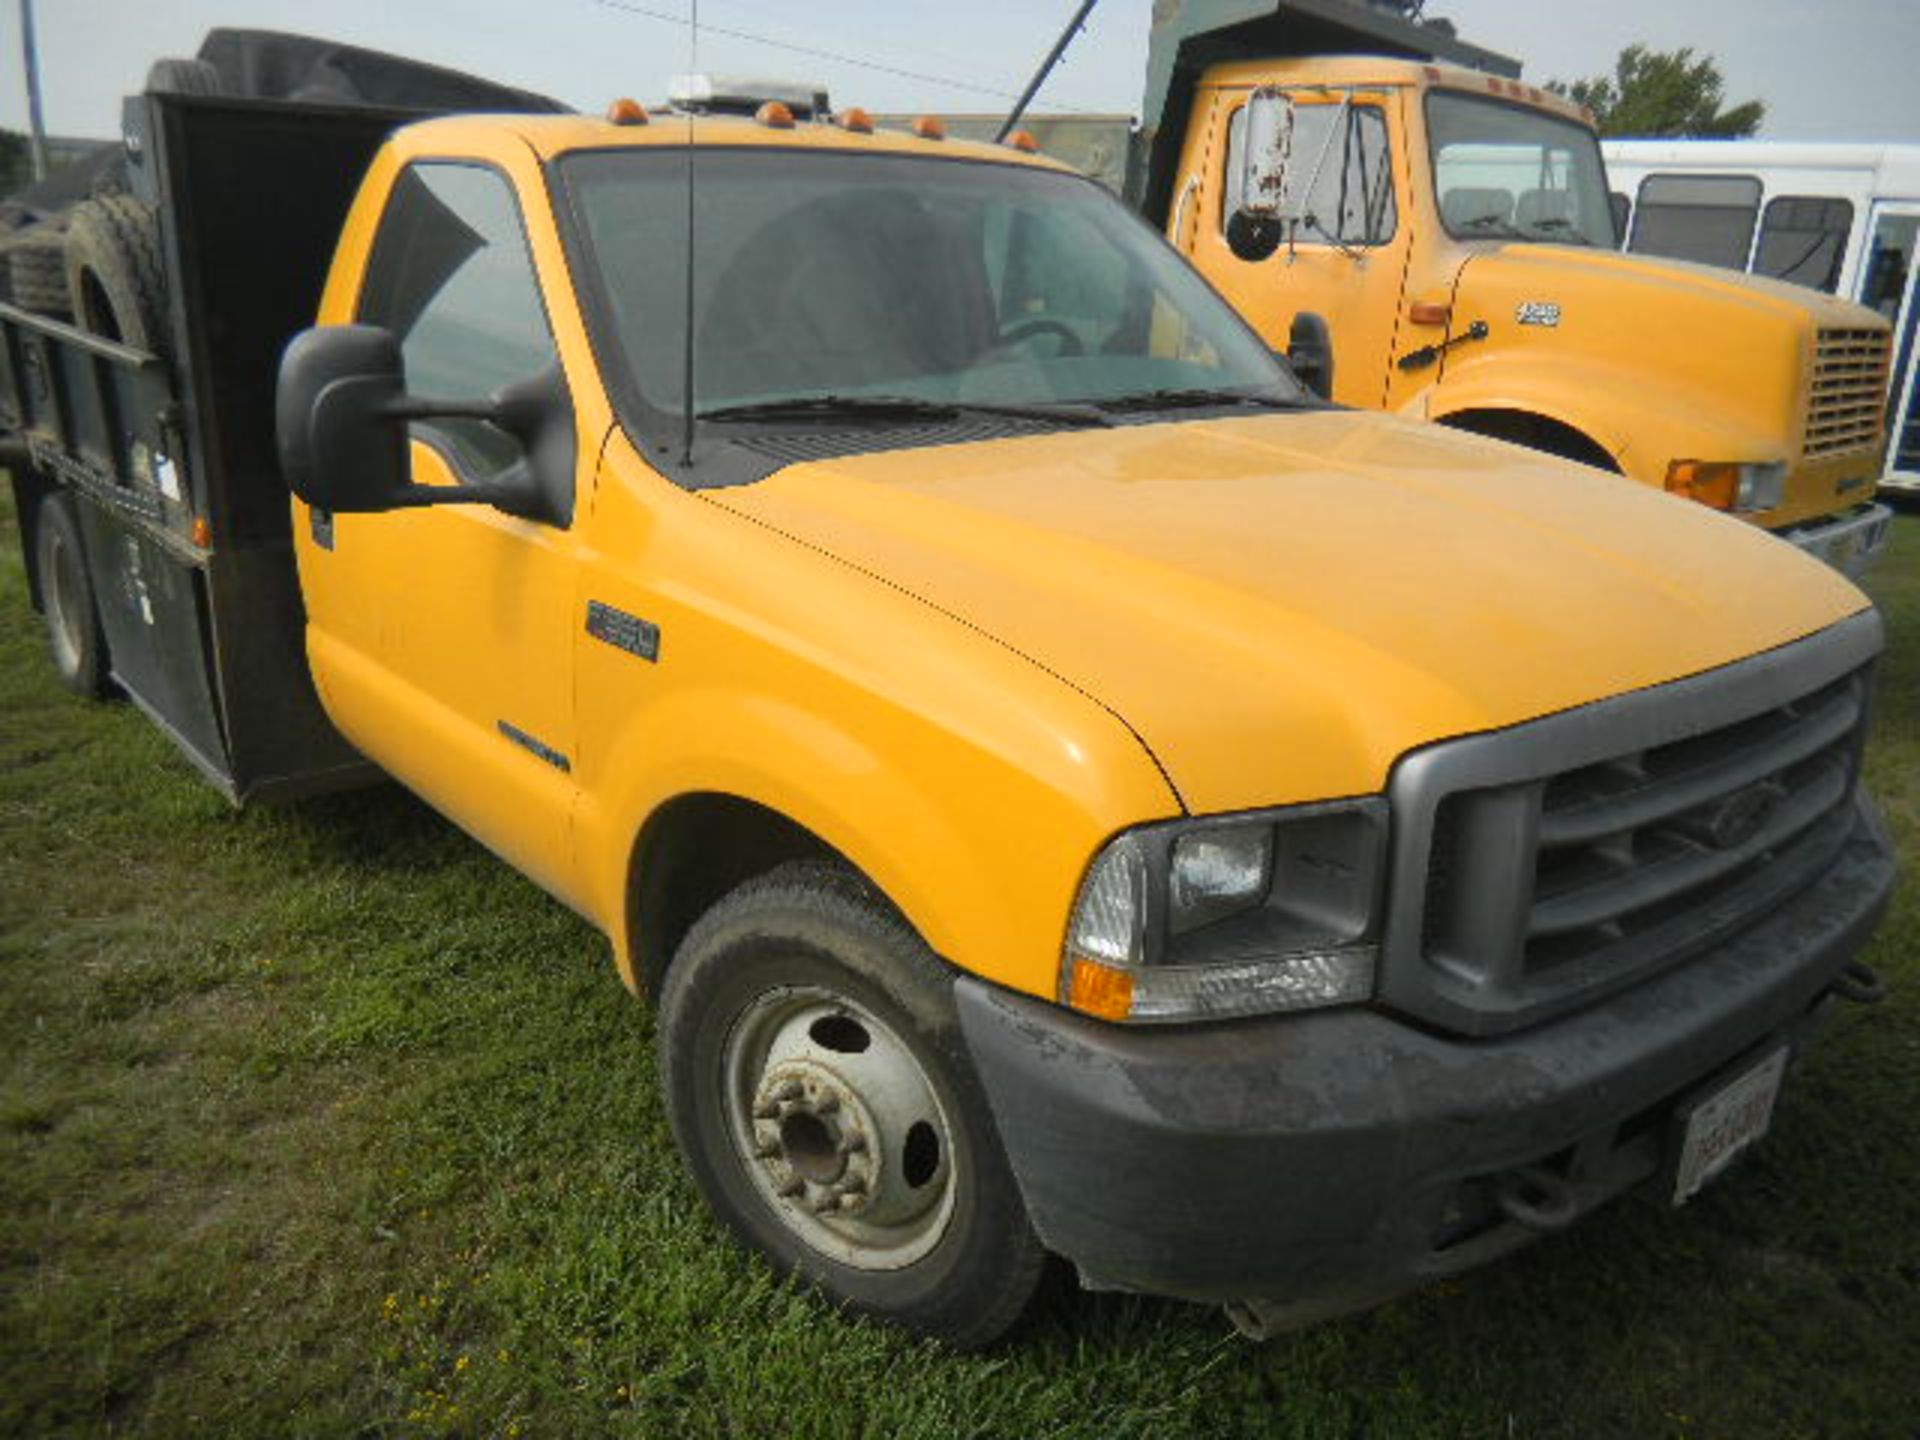 2002 Ford F-350 Super Duty Truck (Yellow) - Asset I.D. #371 - Last of Vin (EC83734)